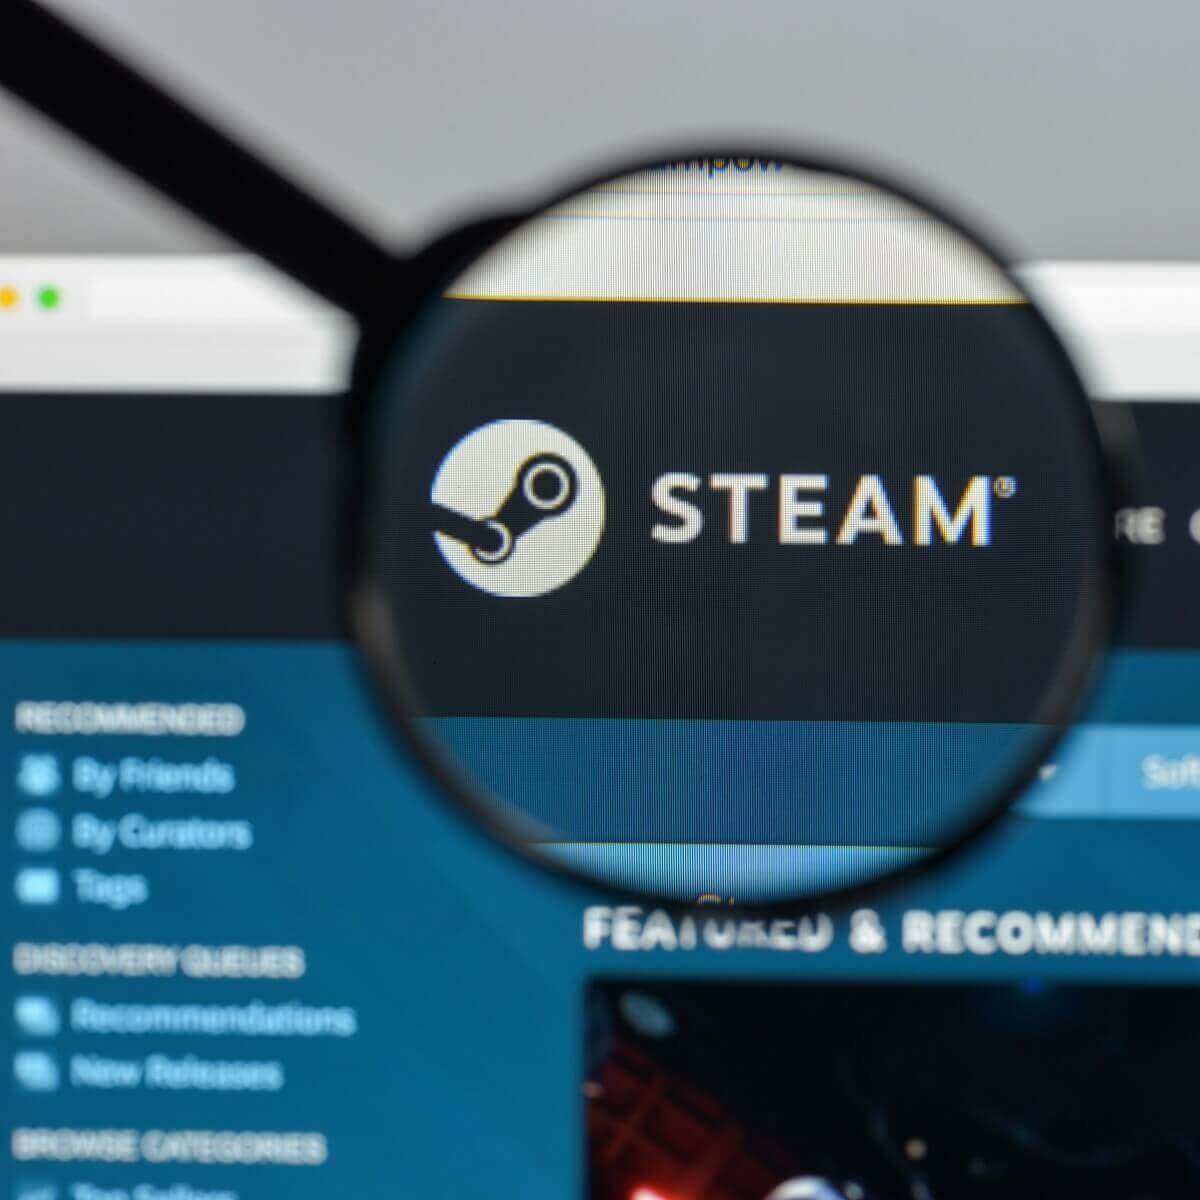 Fix Steam won't open